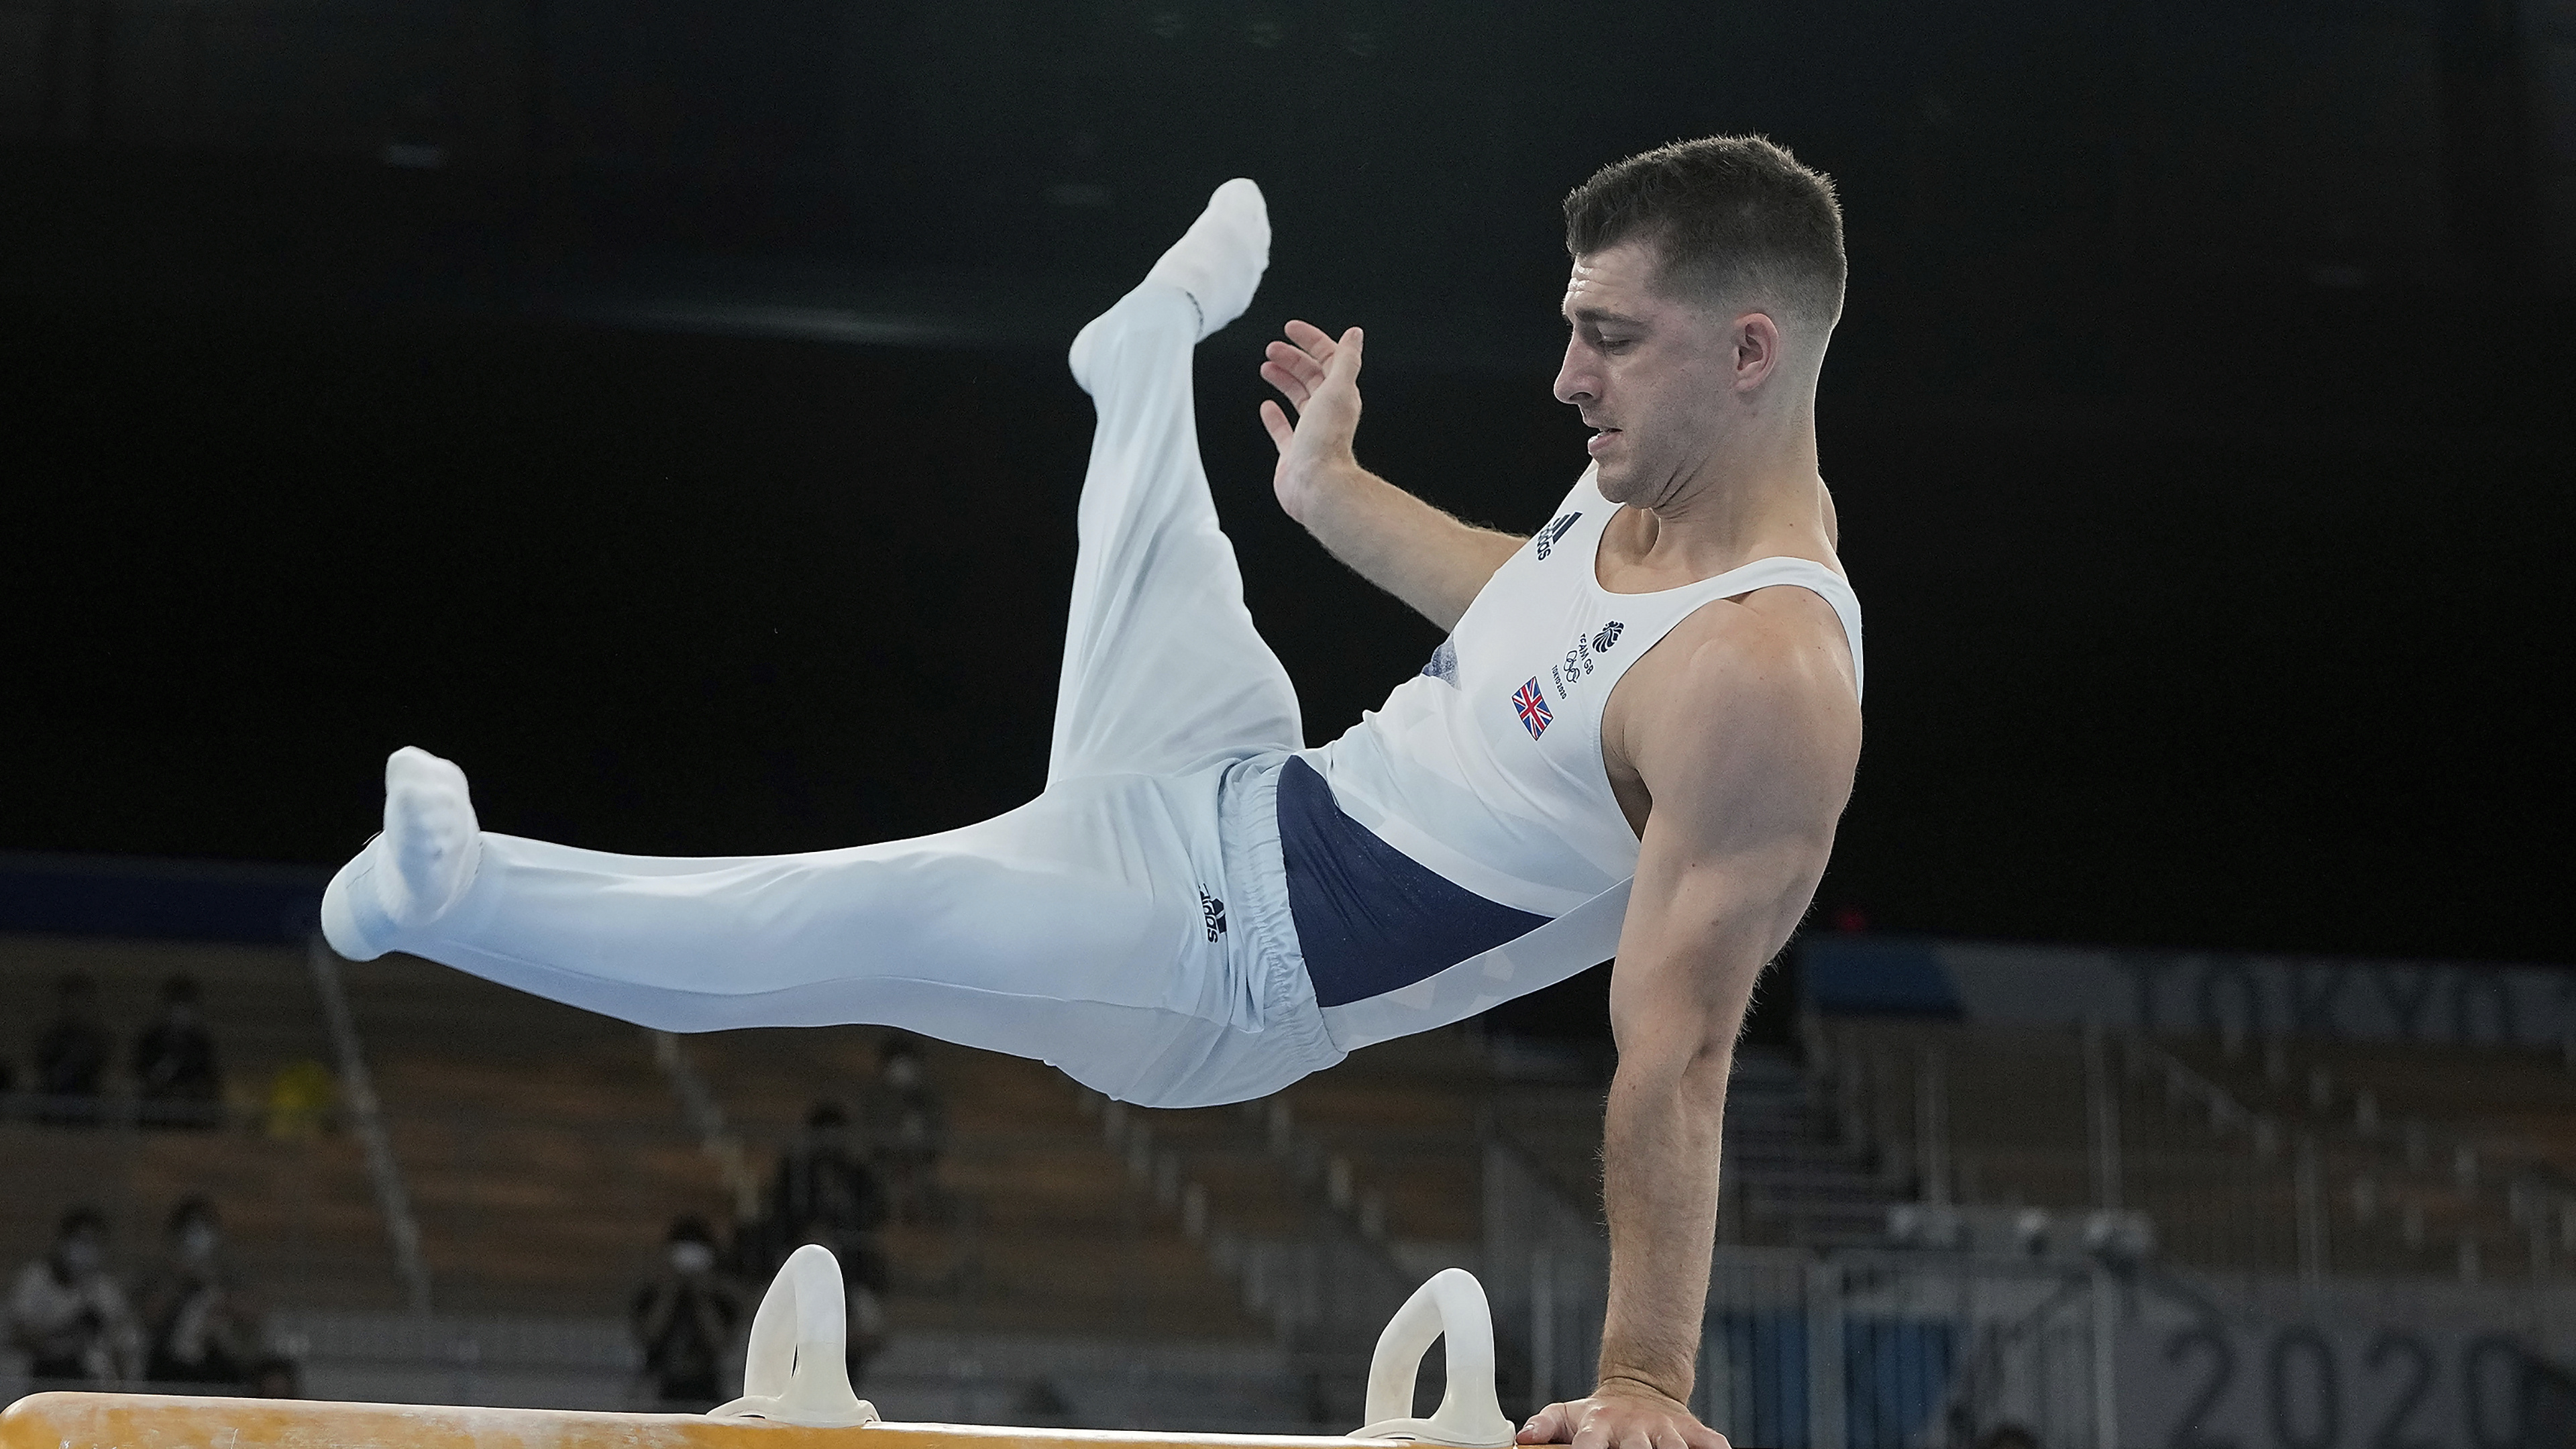 Pommel Horse (Gymnastics): Olympic Men's Gymnastics 2021, Medal winners, Max Whitlock. 3840x2160 4K Wallpaper.